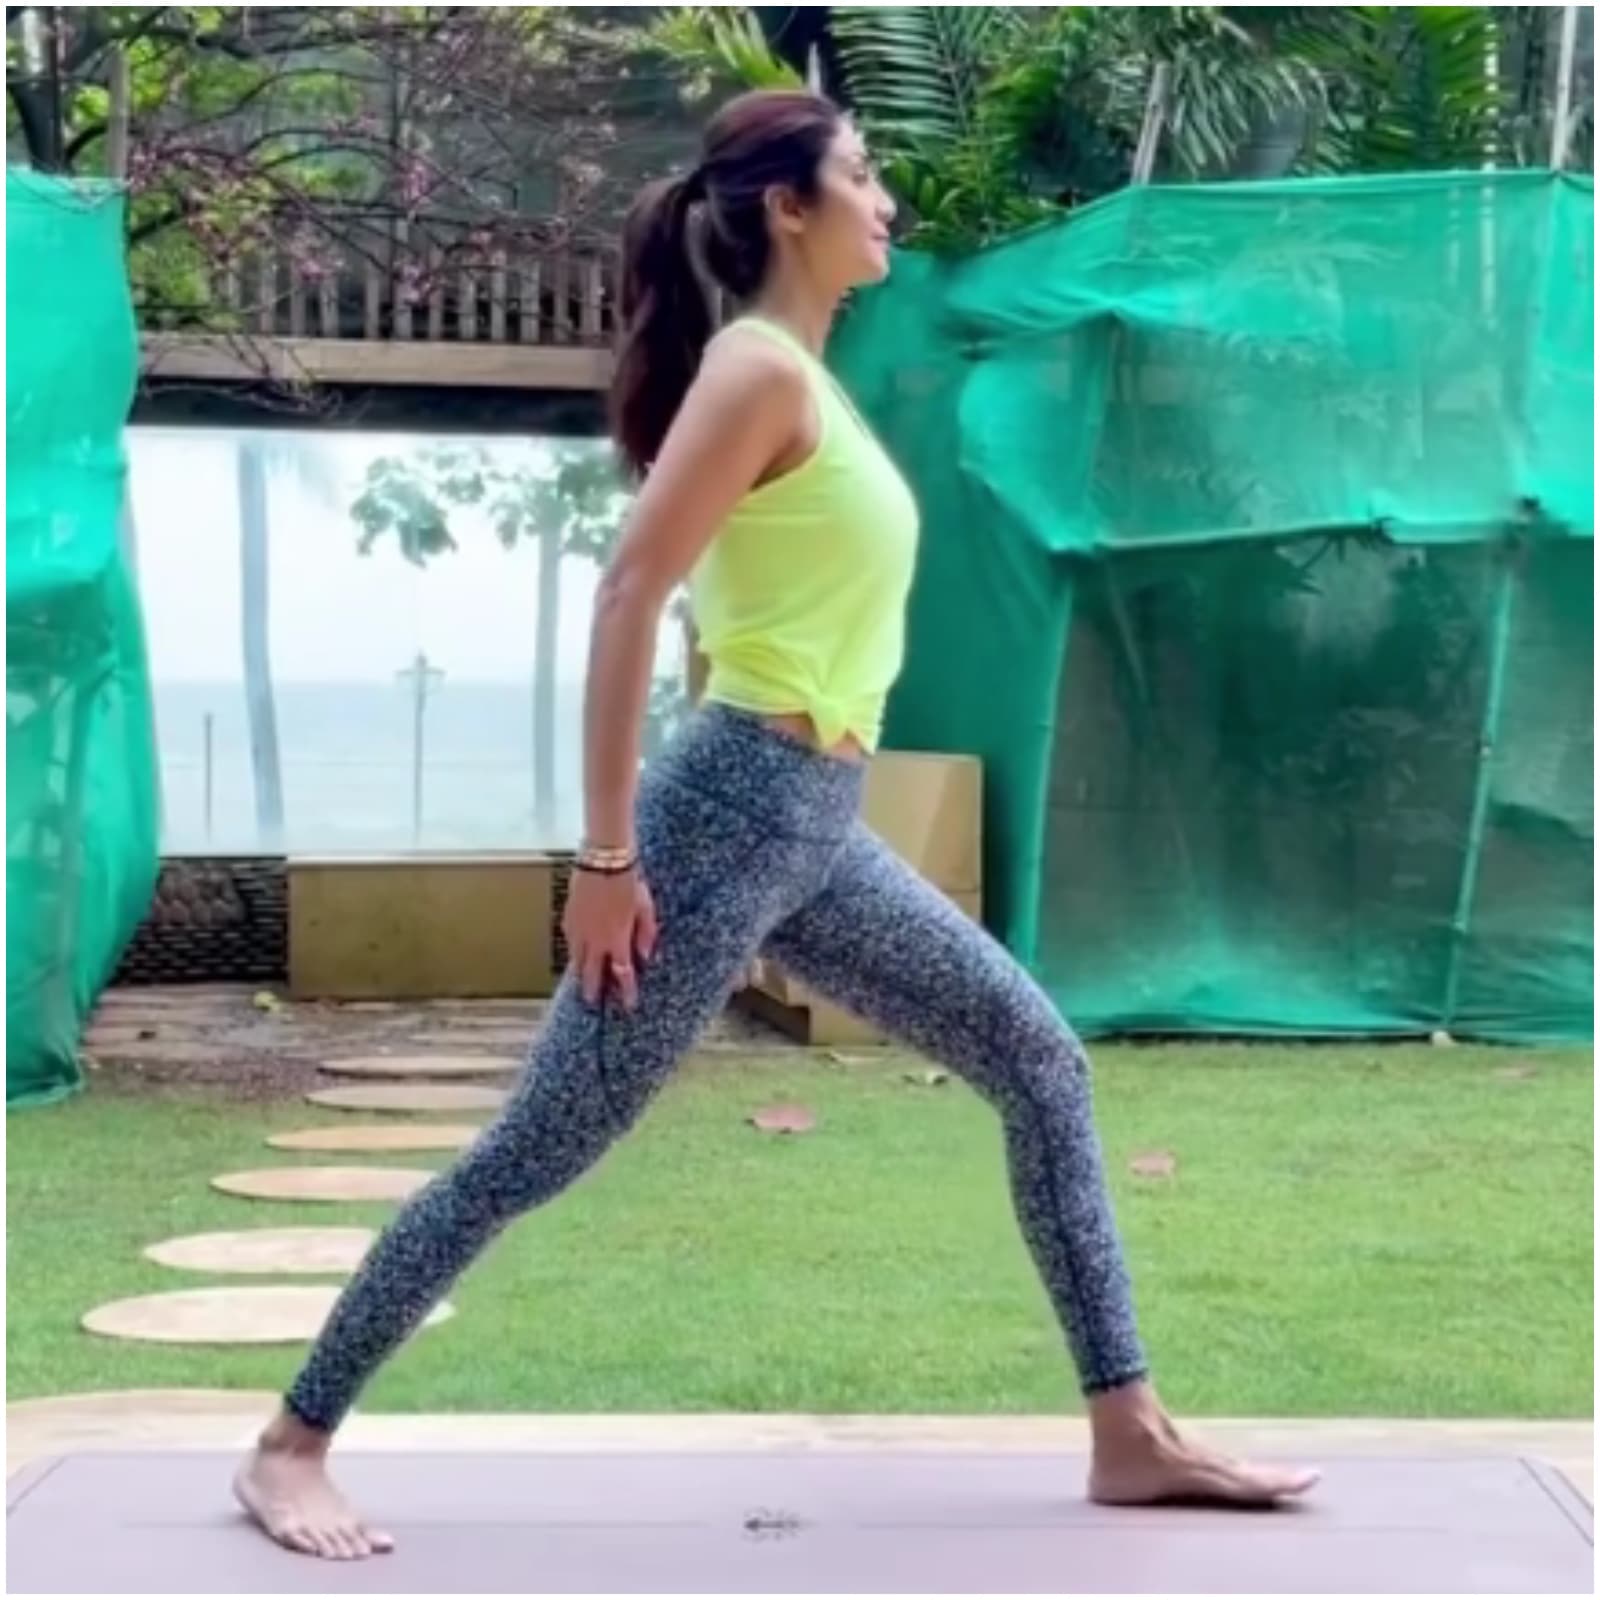 Shilpa Shetty Hot Sex Video - Watch: Shilpa Shetty Shares Yoga Video with Empowering Message - News18